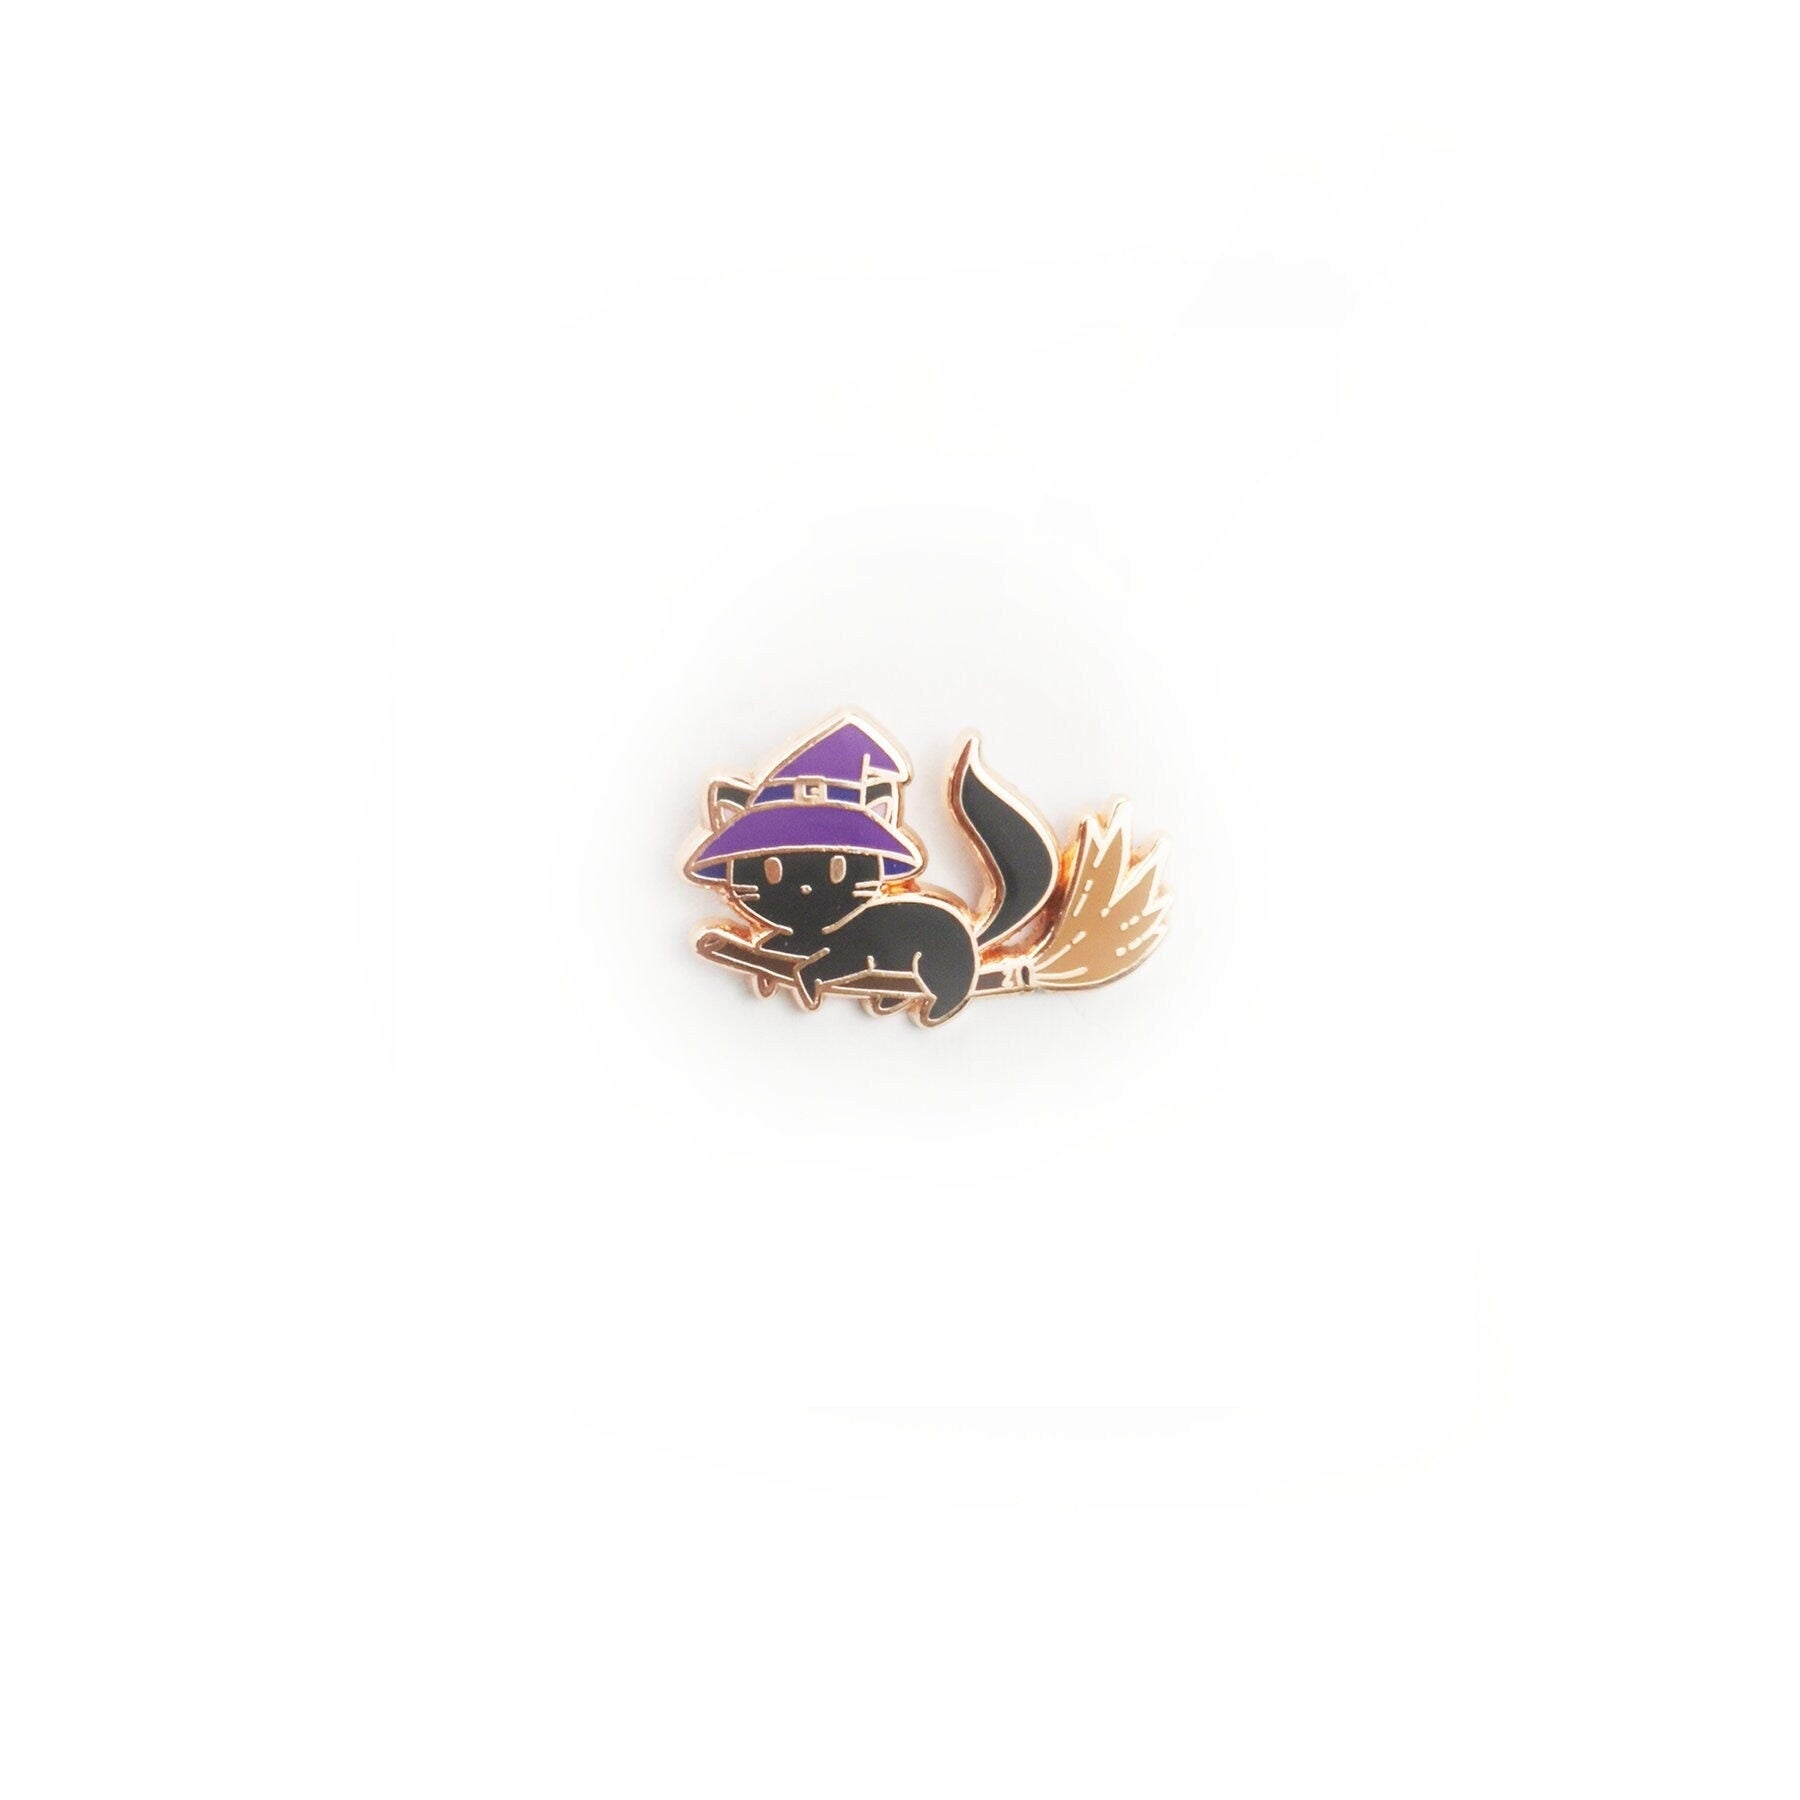 Witch Kitty - Tiny Enamel Pin (Halloween, Kawaii Cat Pin), Pins, Brooches & Lapel Pins